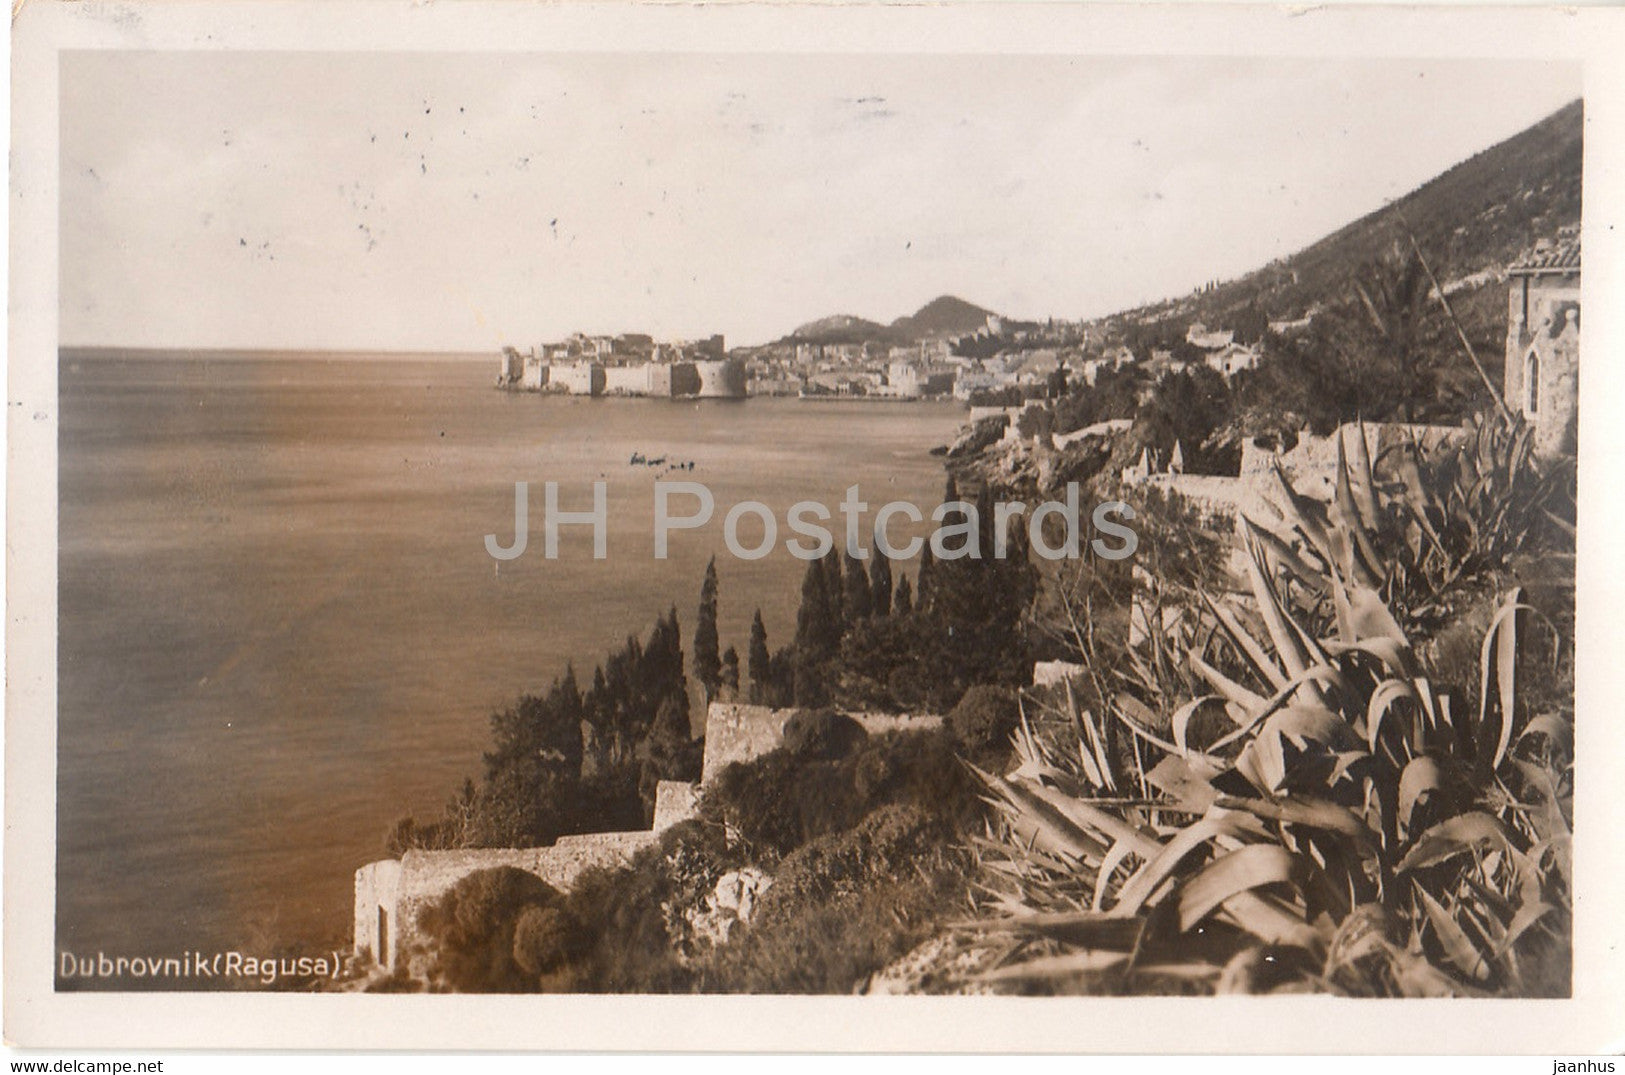 Dubrovnik - Ragusa - Tous les droits reserves - 34 - old postcard - 1938 - Croatia - Yugoslavia - used - JH Postcards